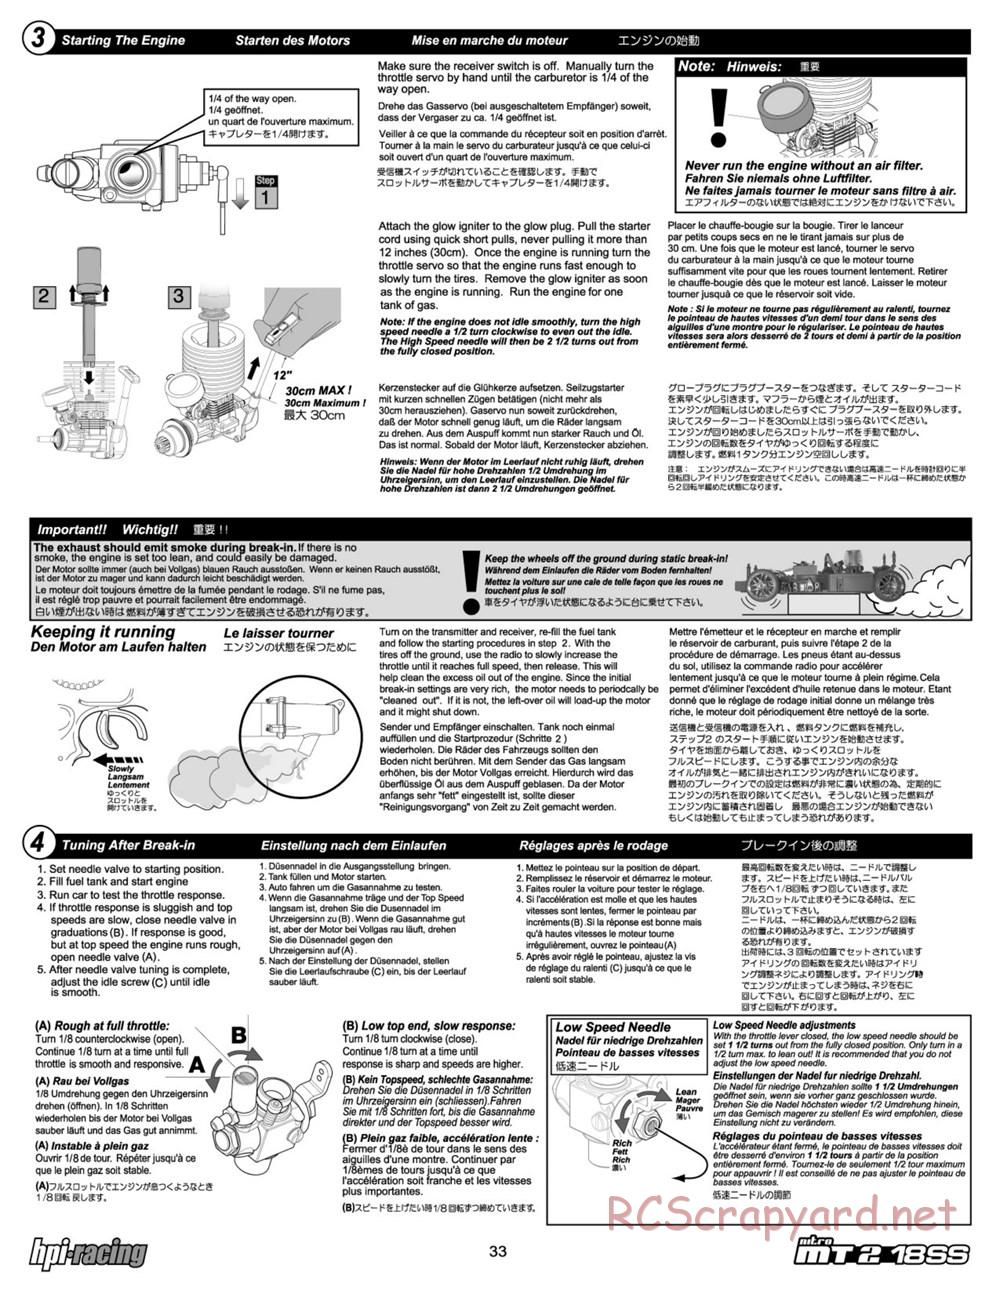 HPI - Nitro MT2 18SS - Manual - Page 33